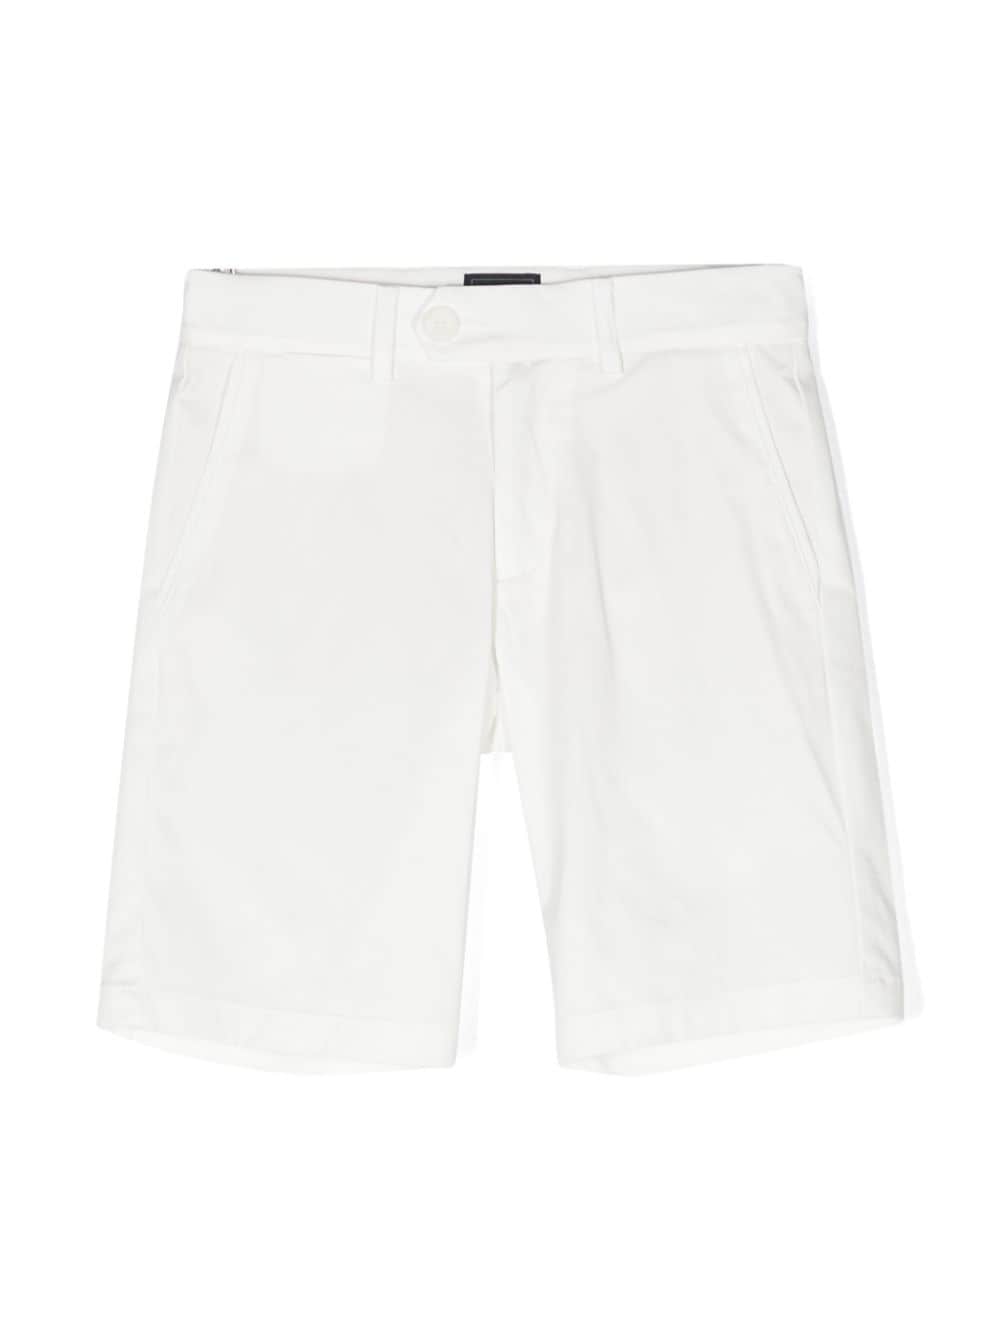 Fay Kids tailored cotton shorts - White von Fay Kids